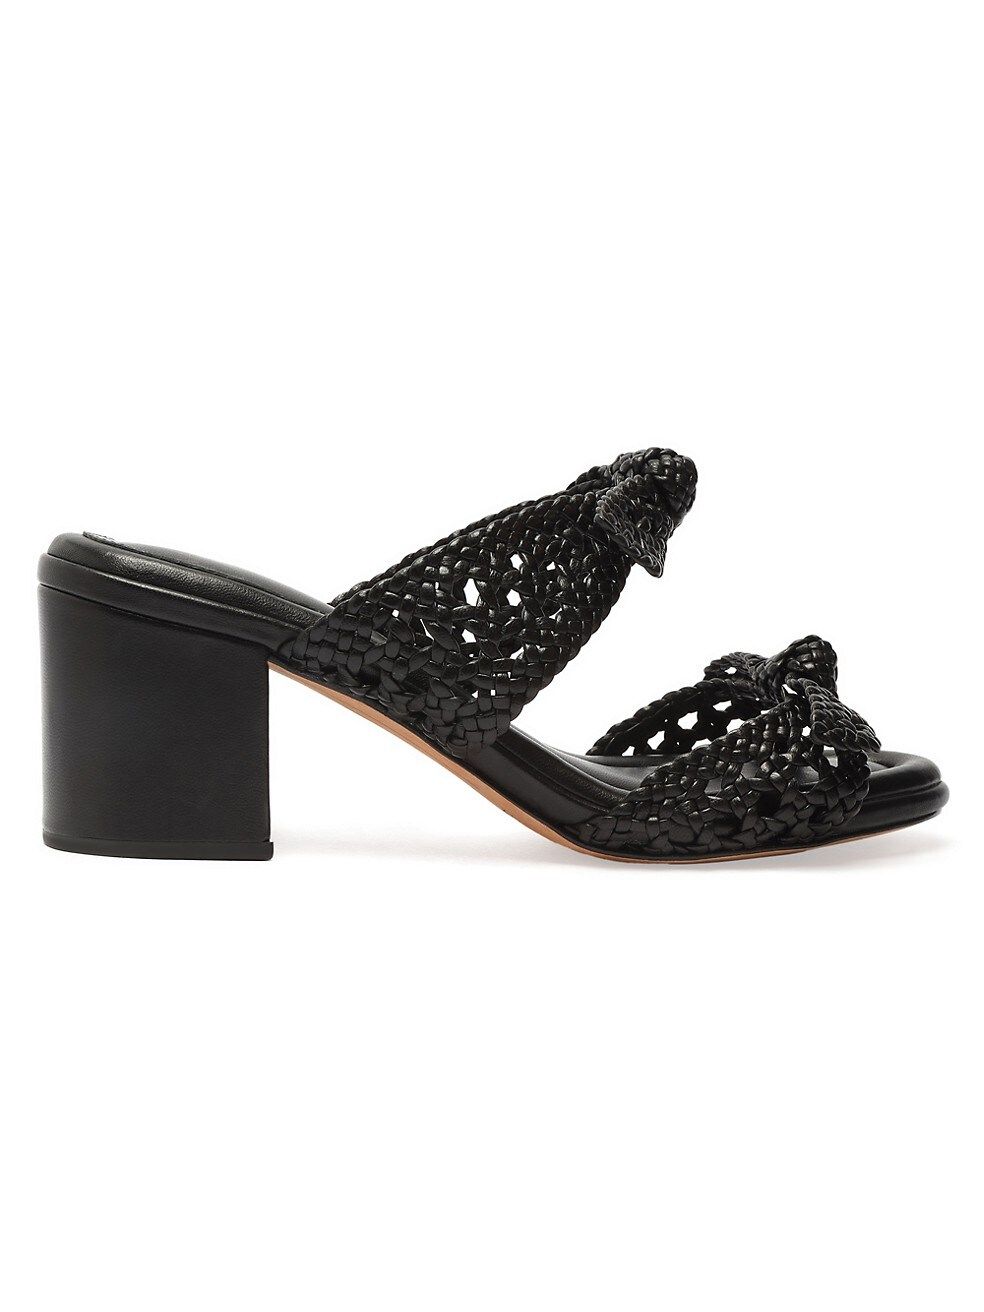 Alexandre Birman Clarita 60MM Leather Sandals | Saks Fifth Avenue